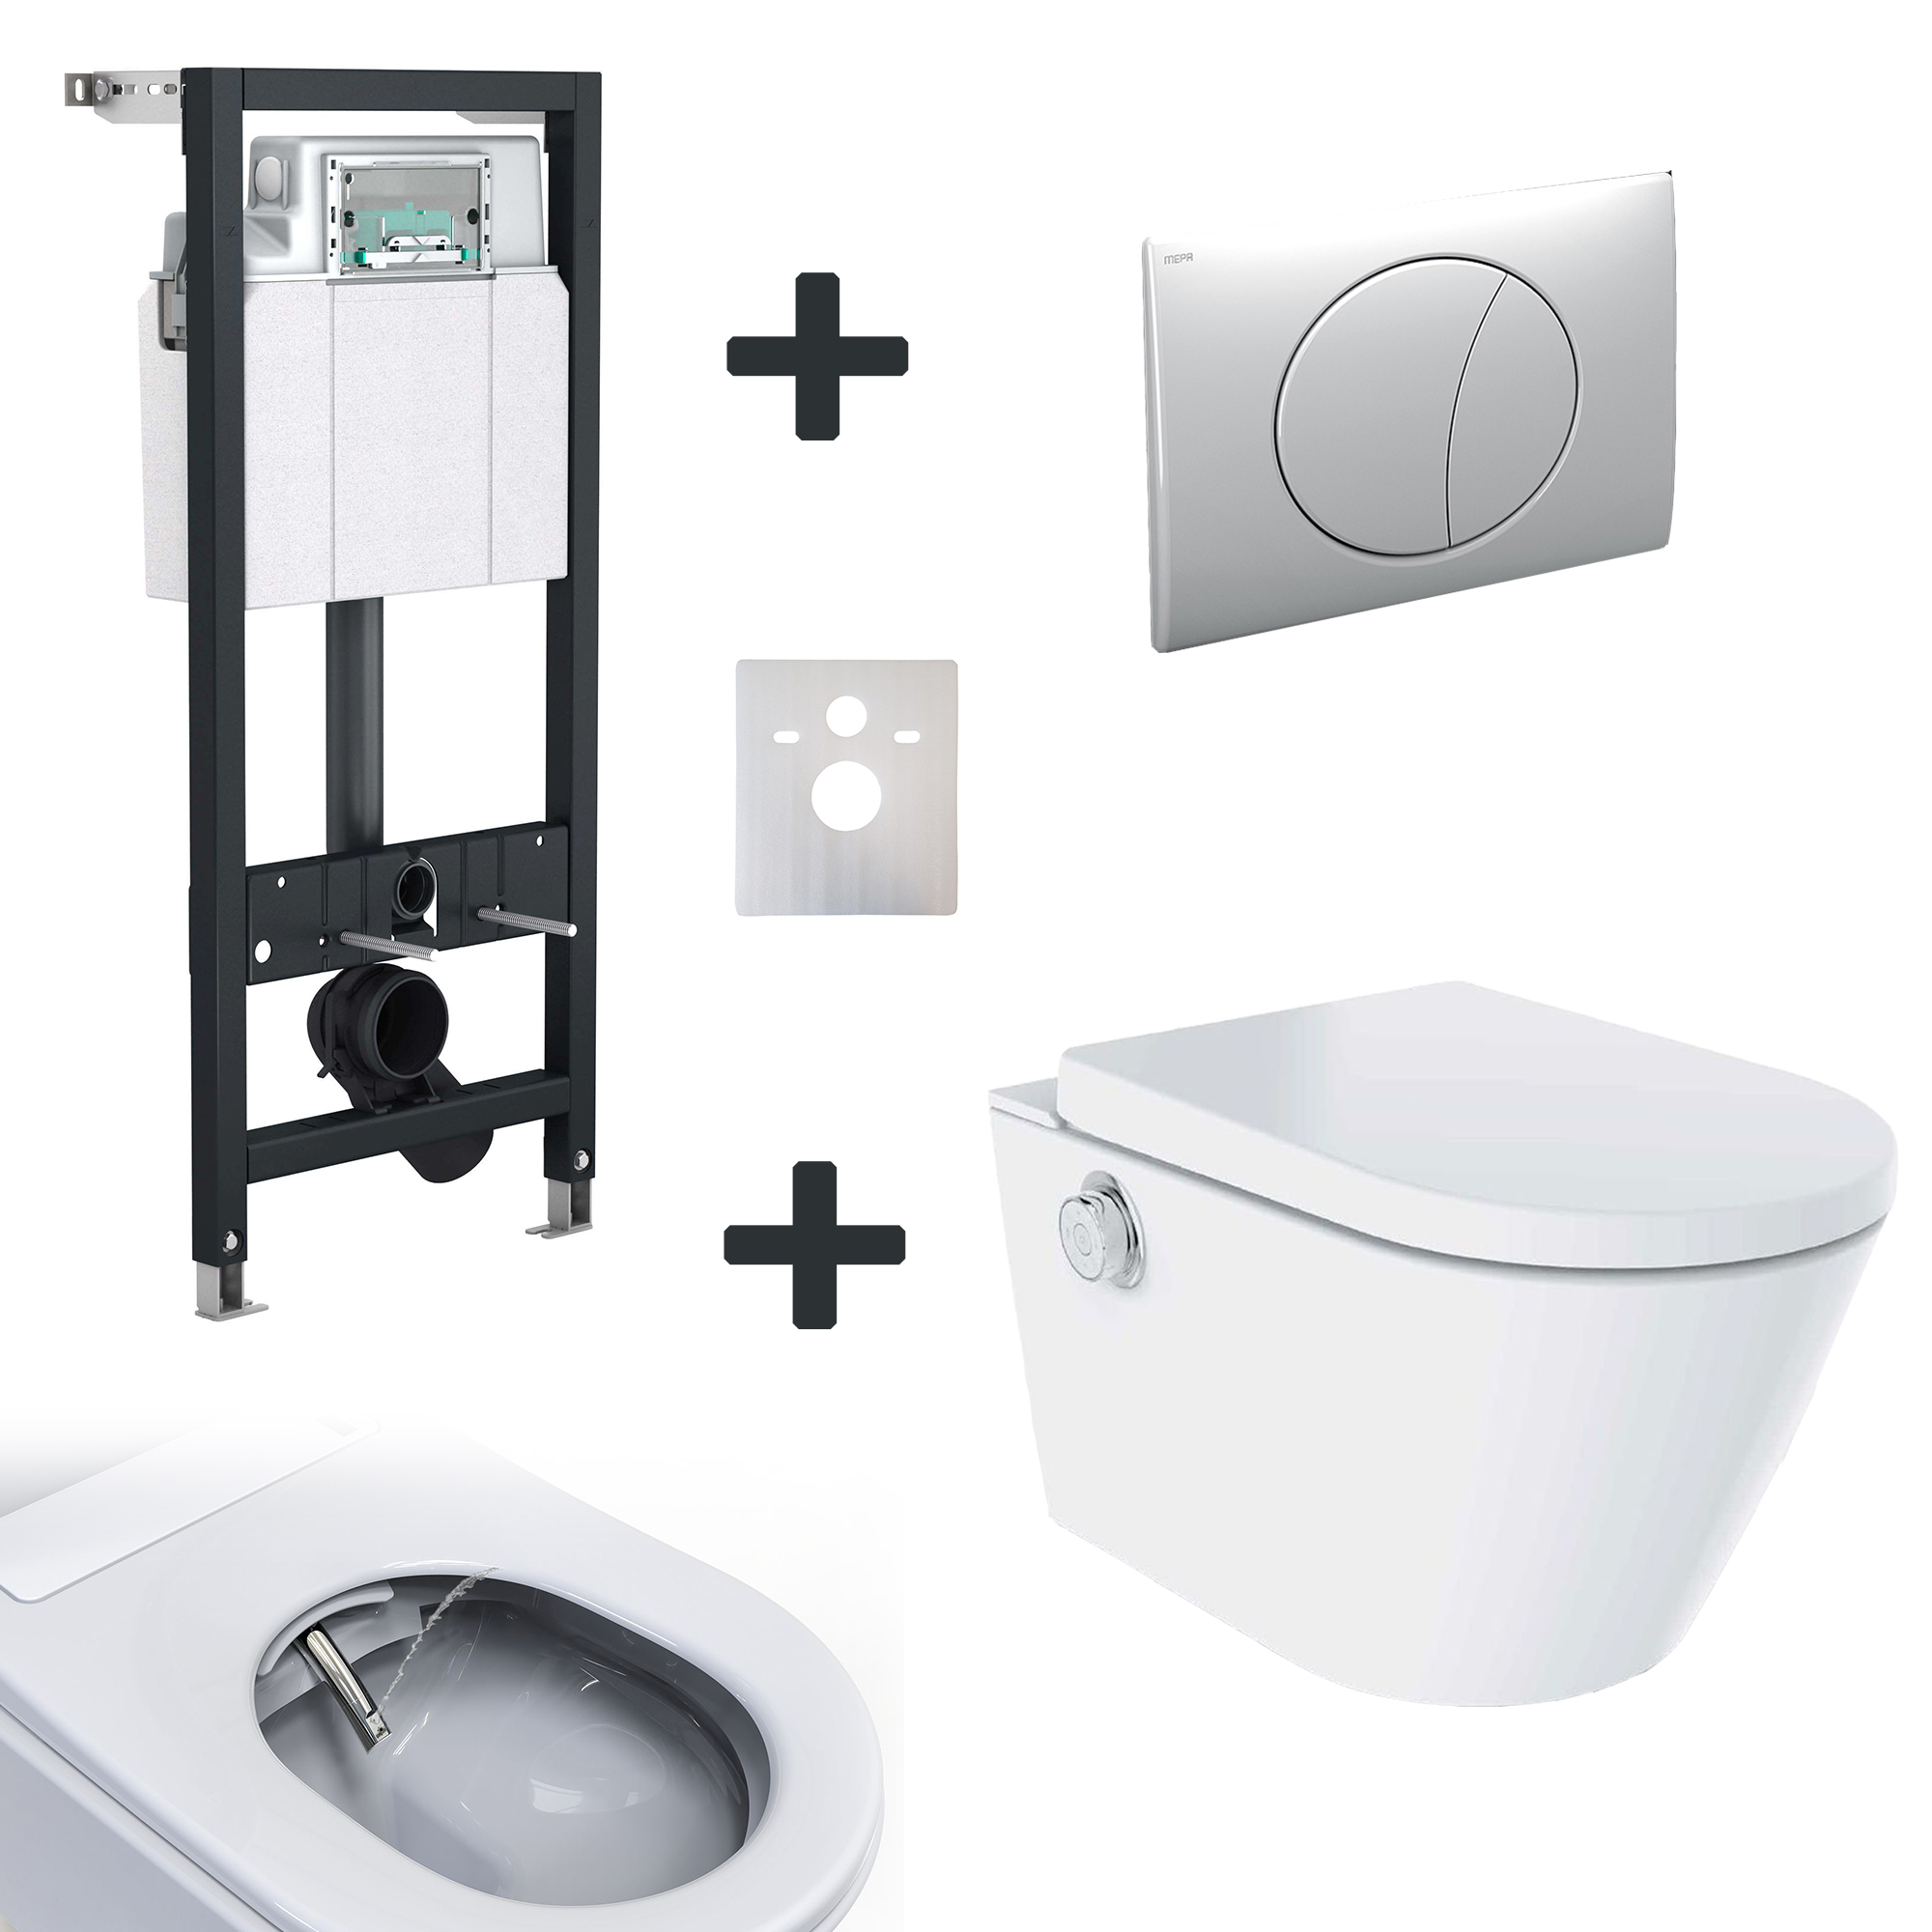 Spülrandloses Dusch-WC STATION-ECO inkl. Spülkasten und Betätigungsplatte (set)